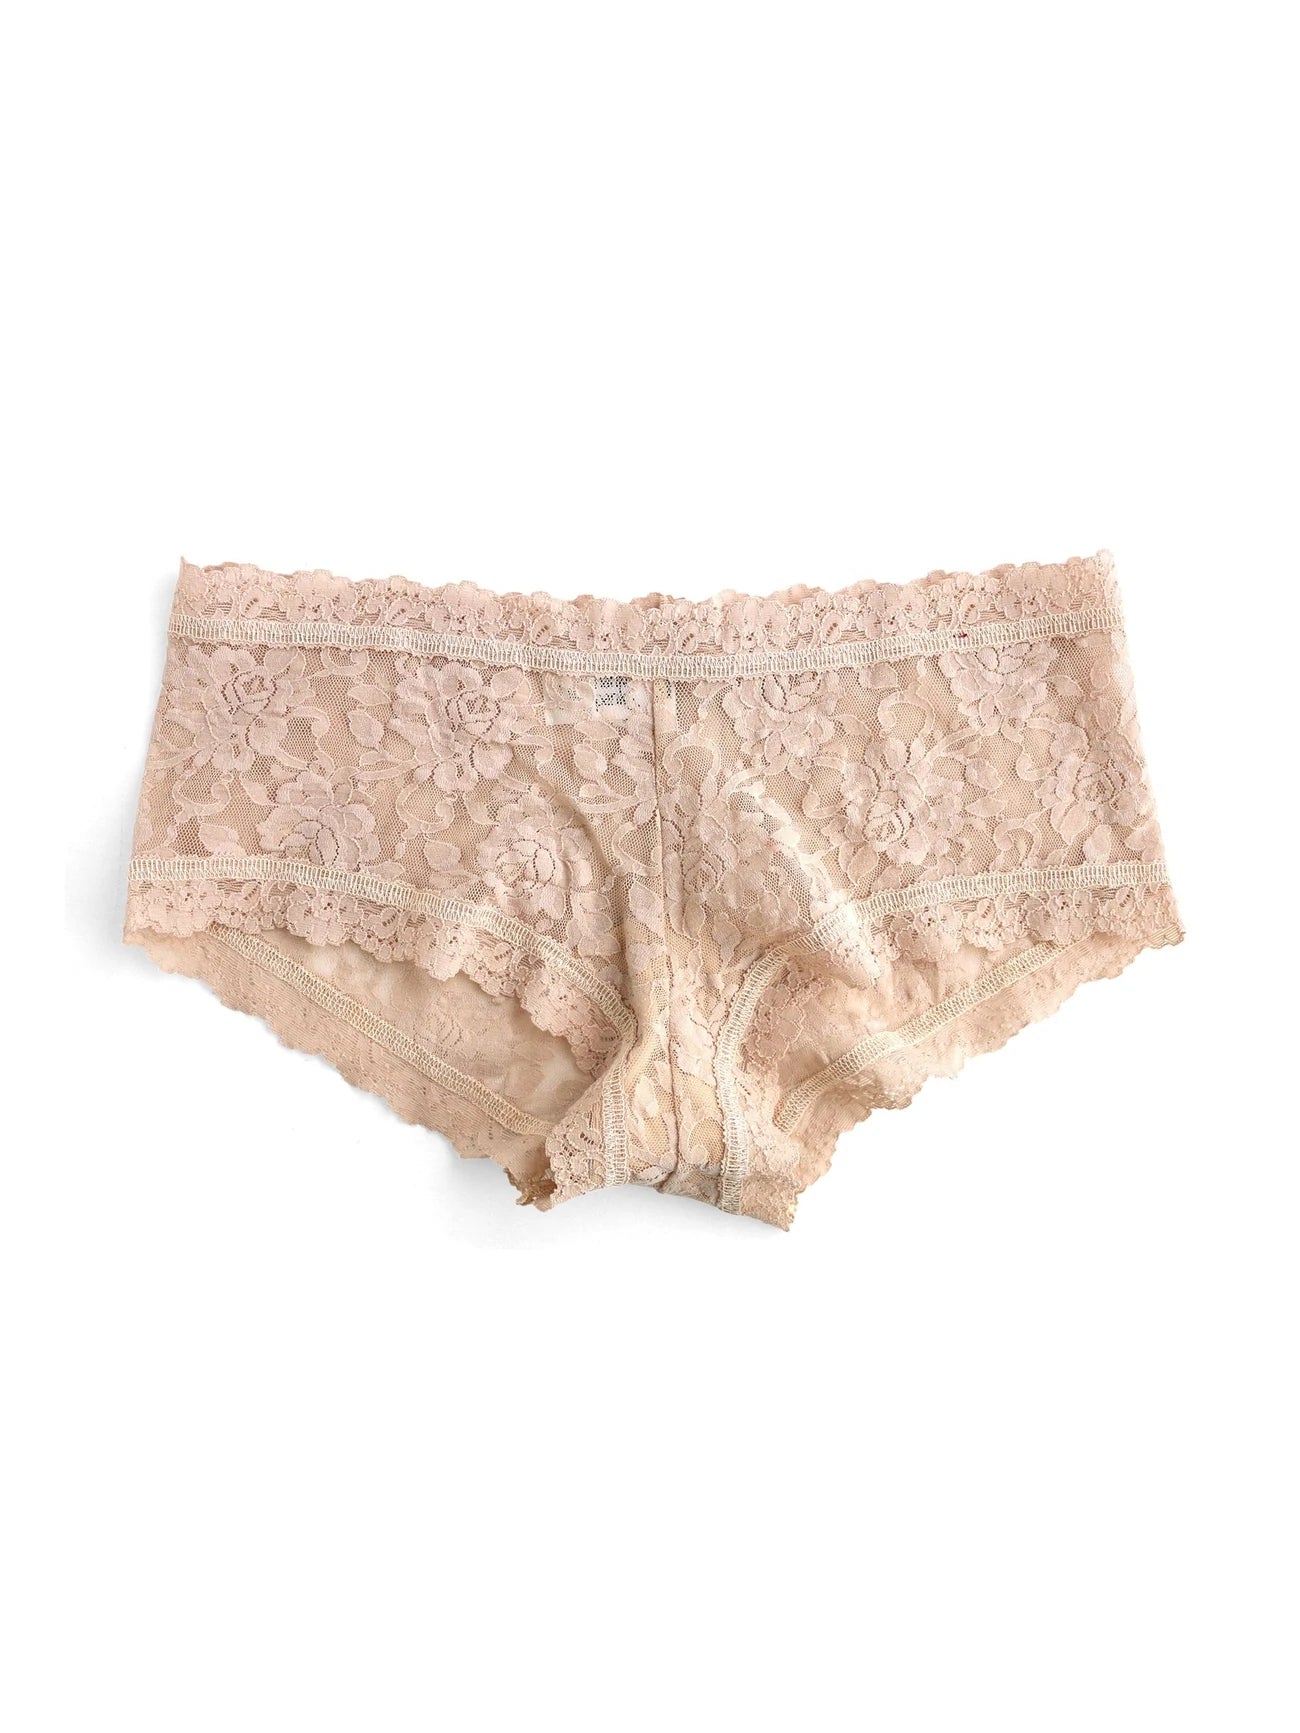 Lace Boyshort Underwear Hanky Panky Chai XS 